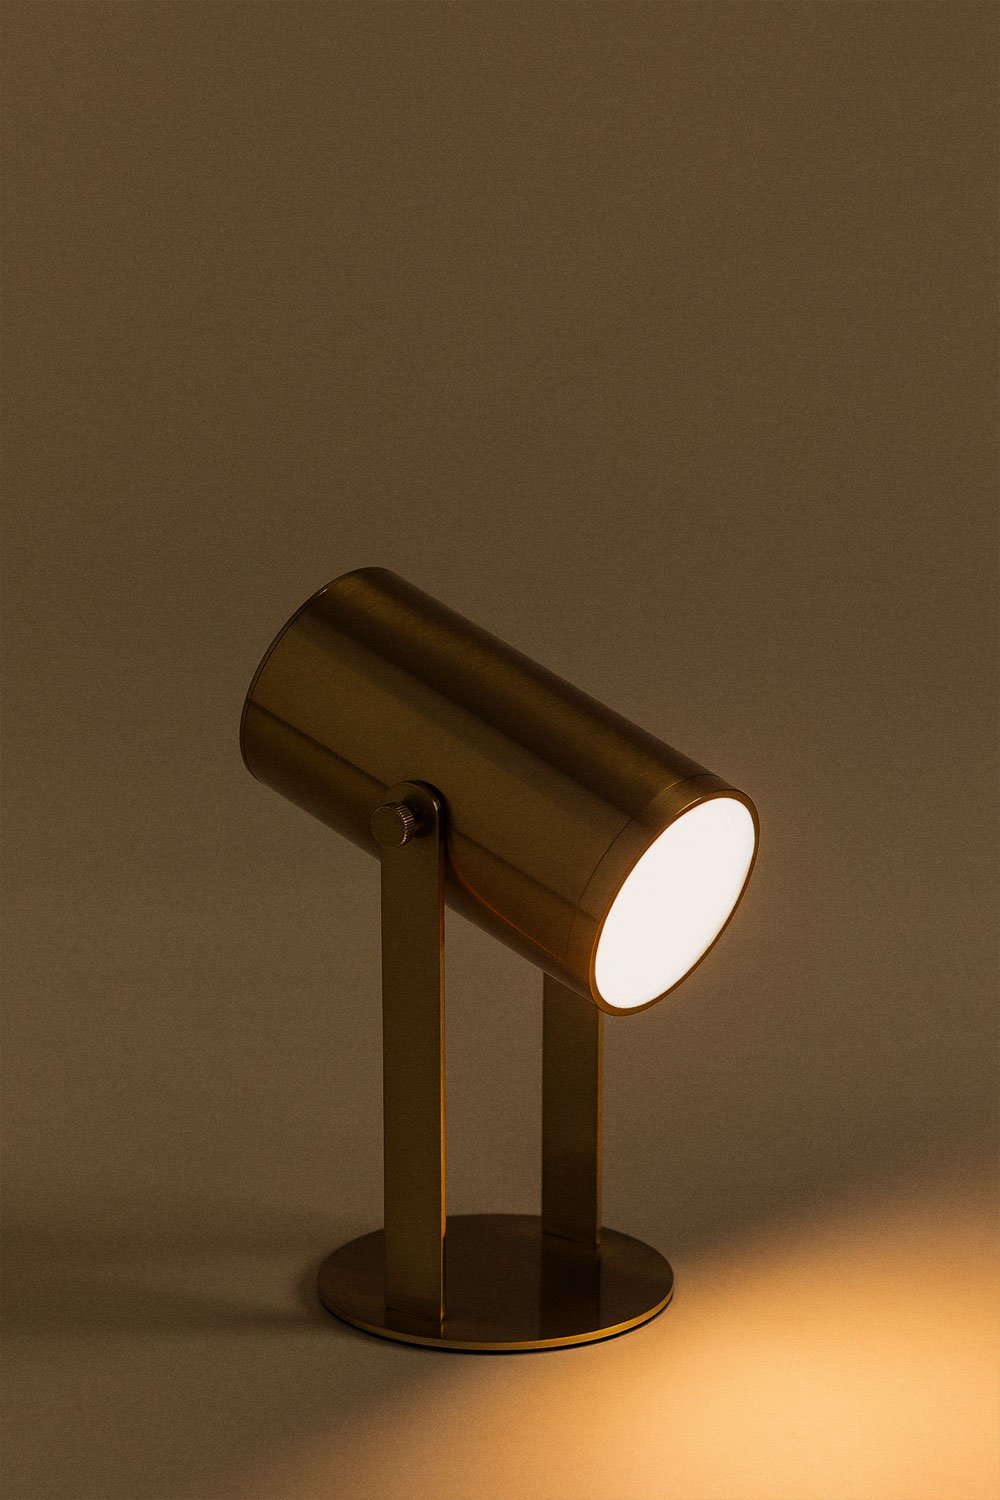 Lampe de table LED sans fil Eunice - SKLUM